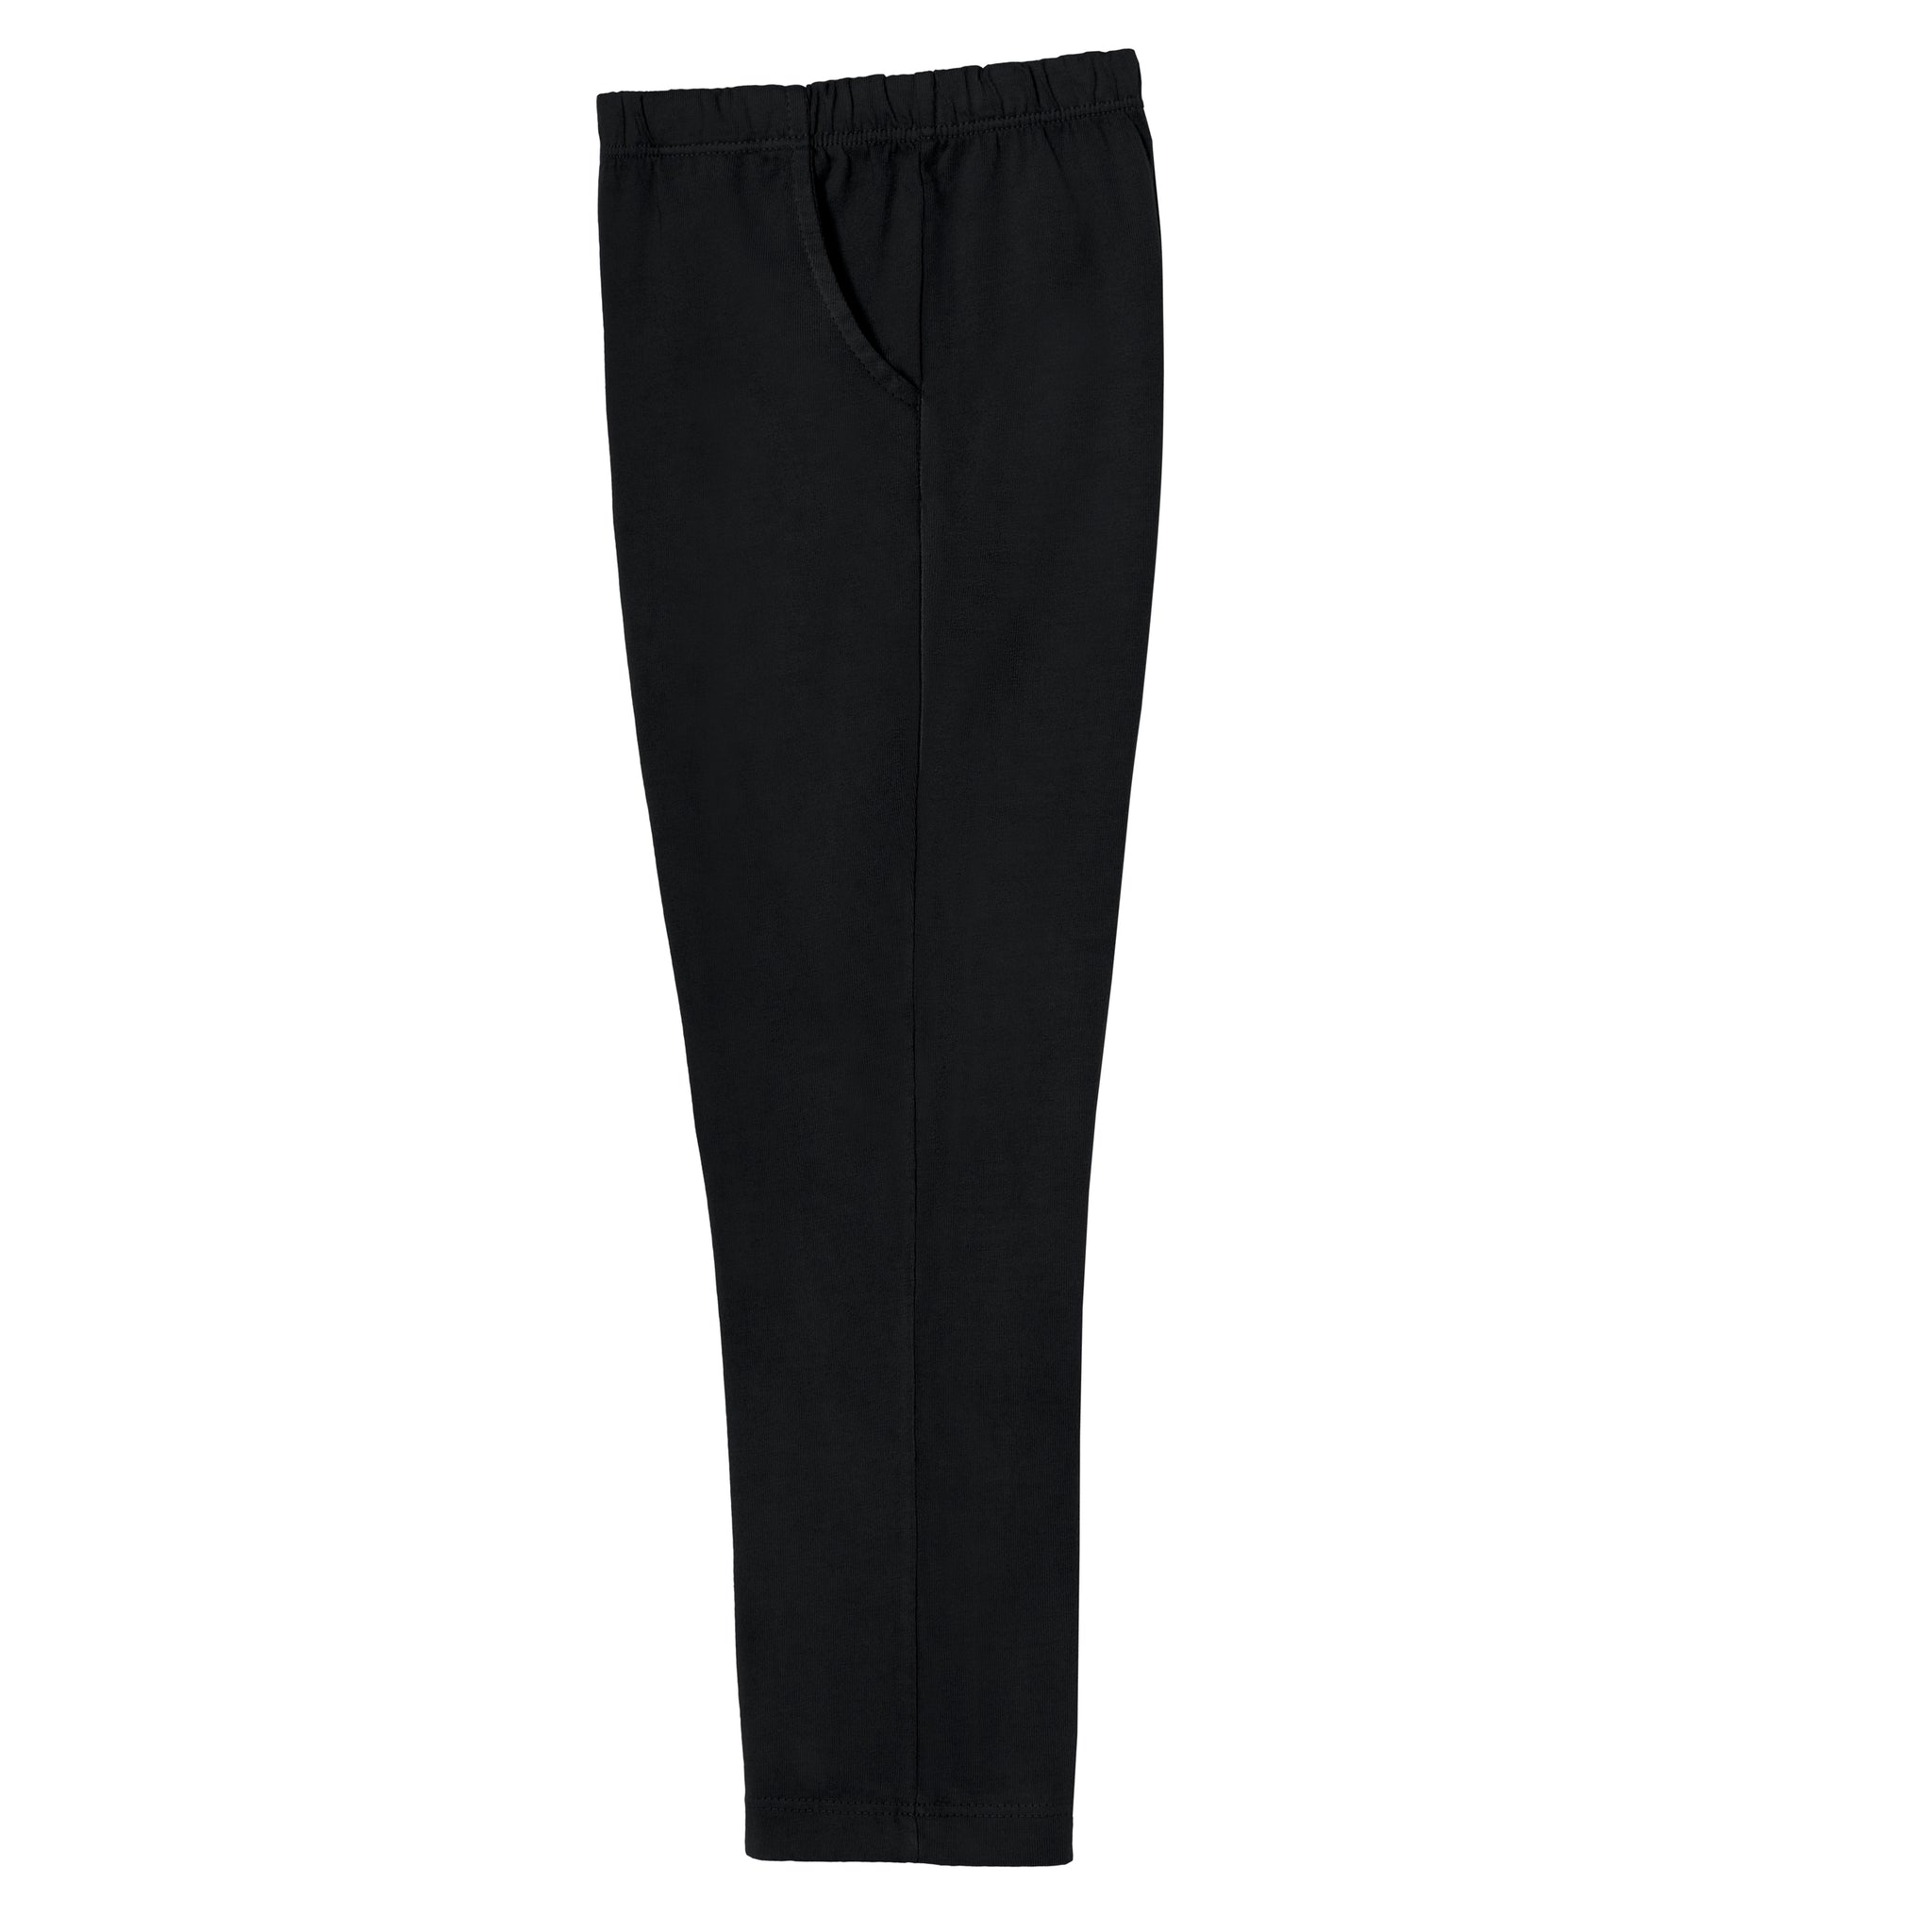 Women's Lightweight Cotton Blend Jersey Jogger Pants with Side Pockets -  Black / S